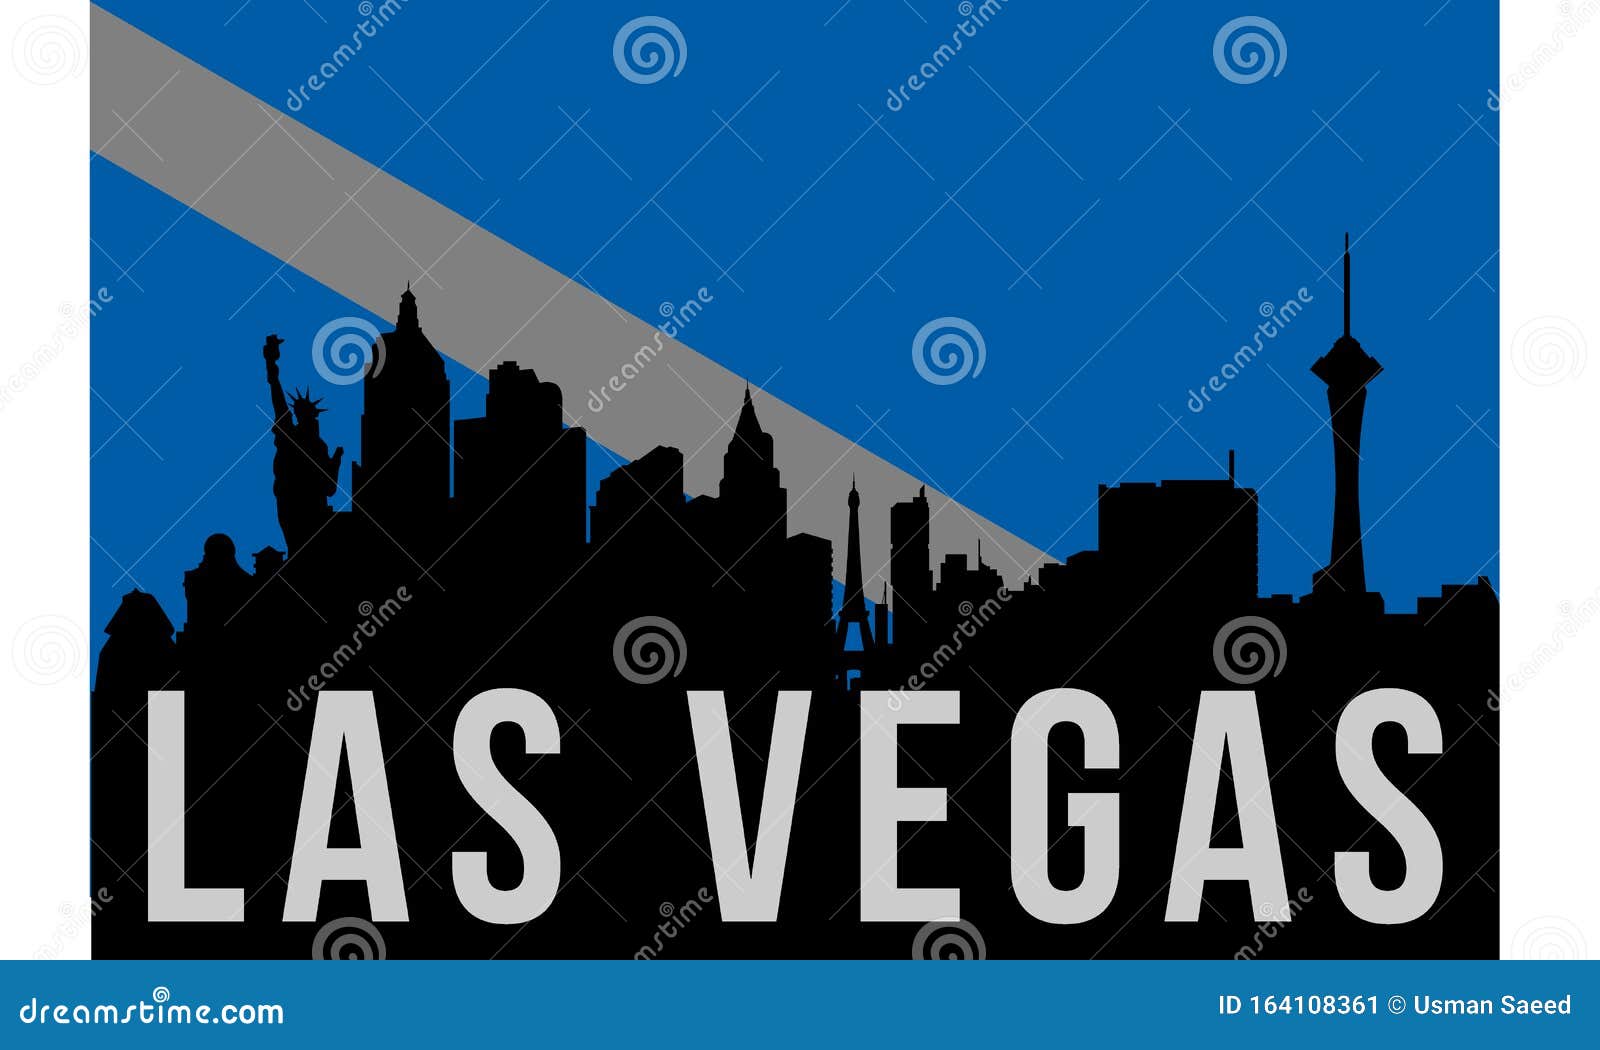 Las vegas city skyline silhouette background Vector Image